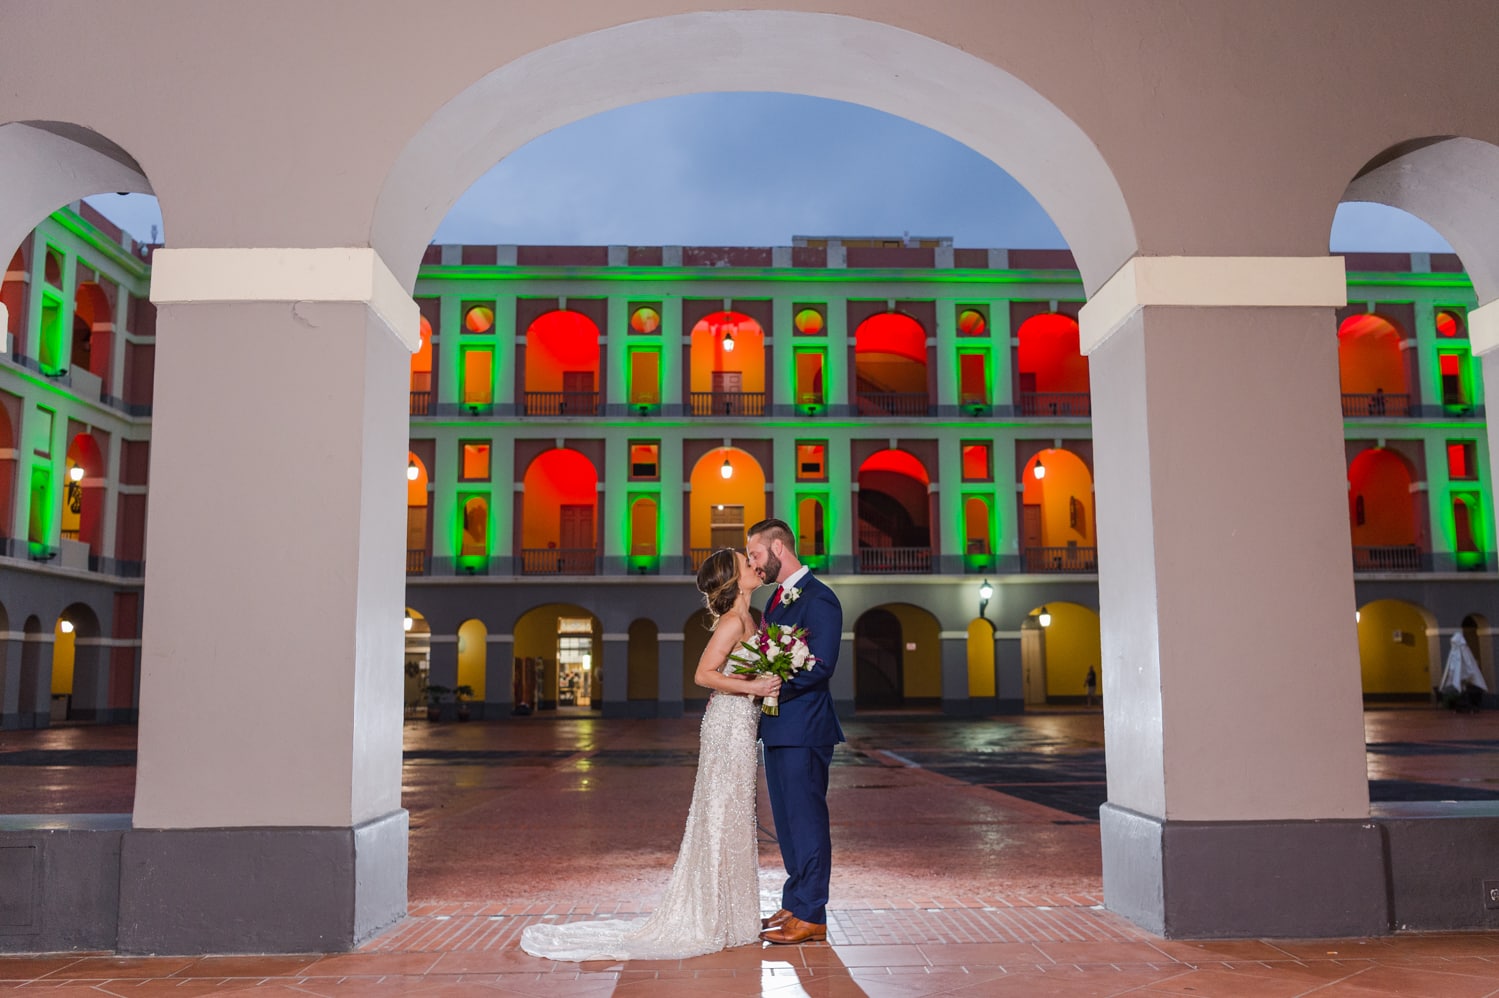 destination wedding photographer Camille Fontanez shares an elopement at an indie movie theater